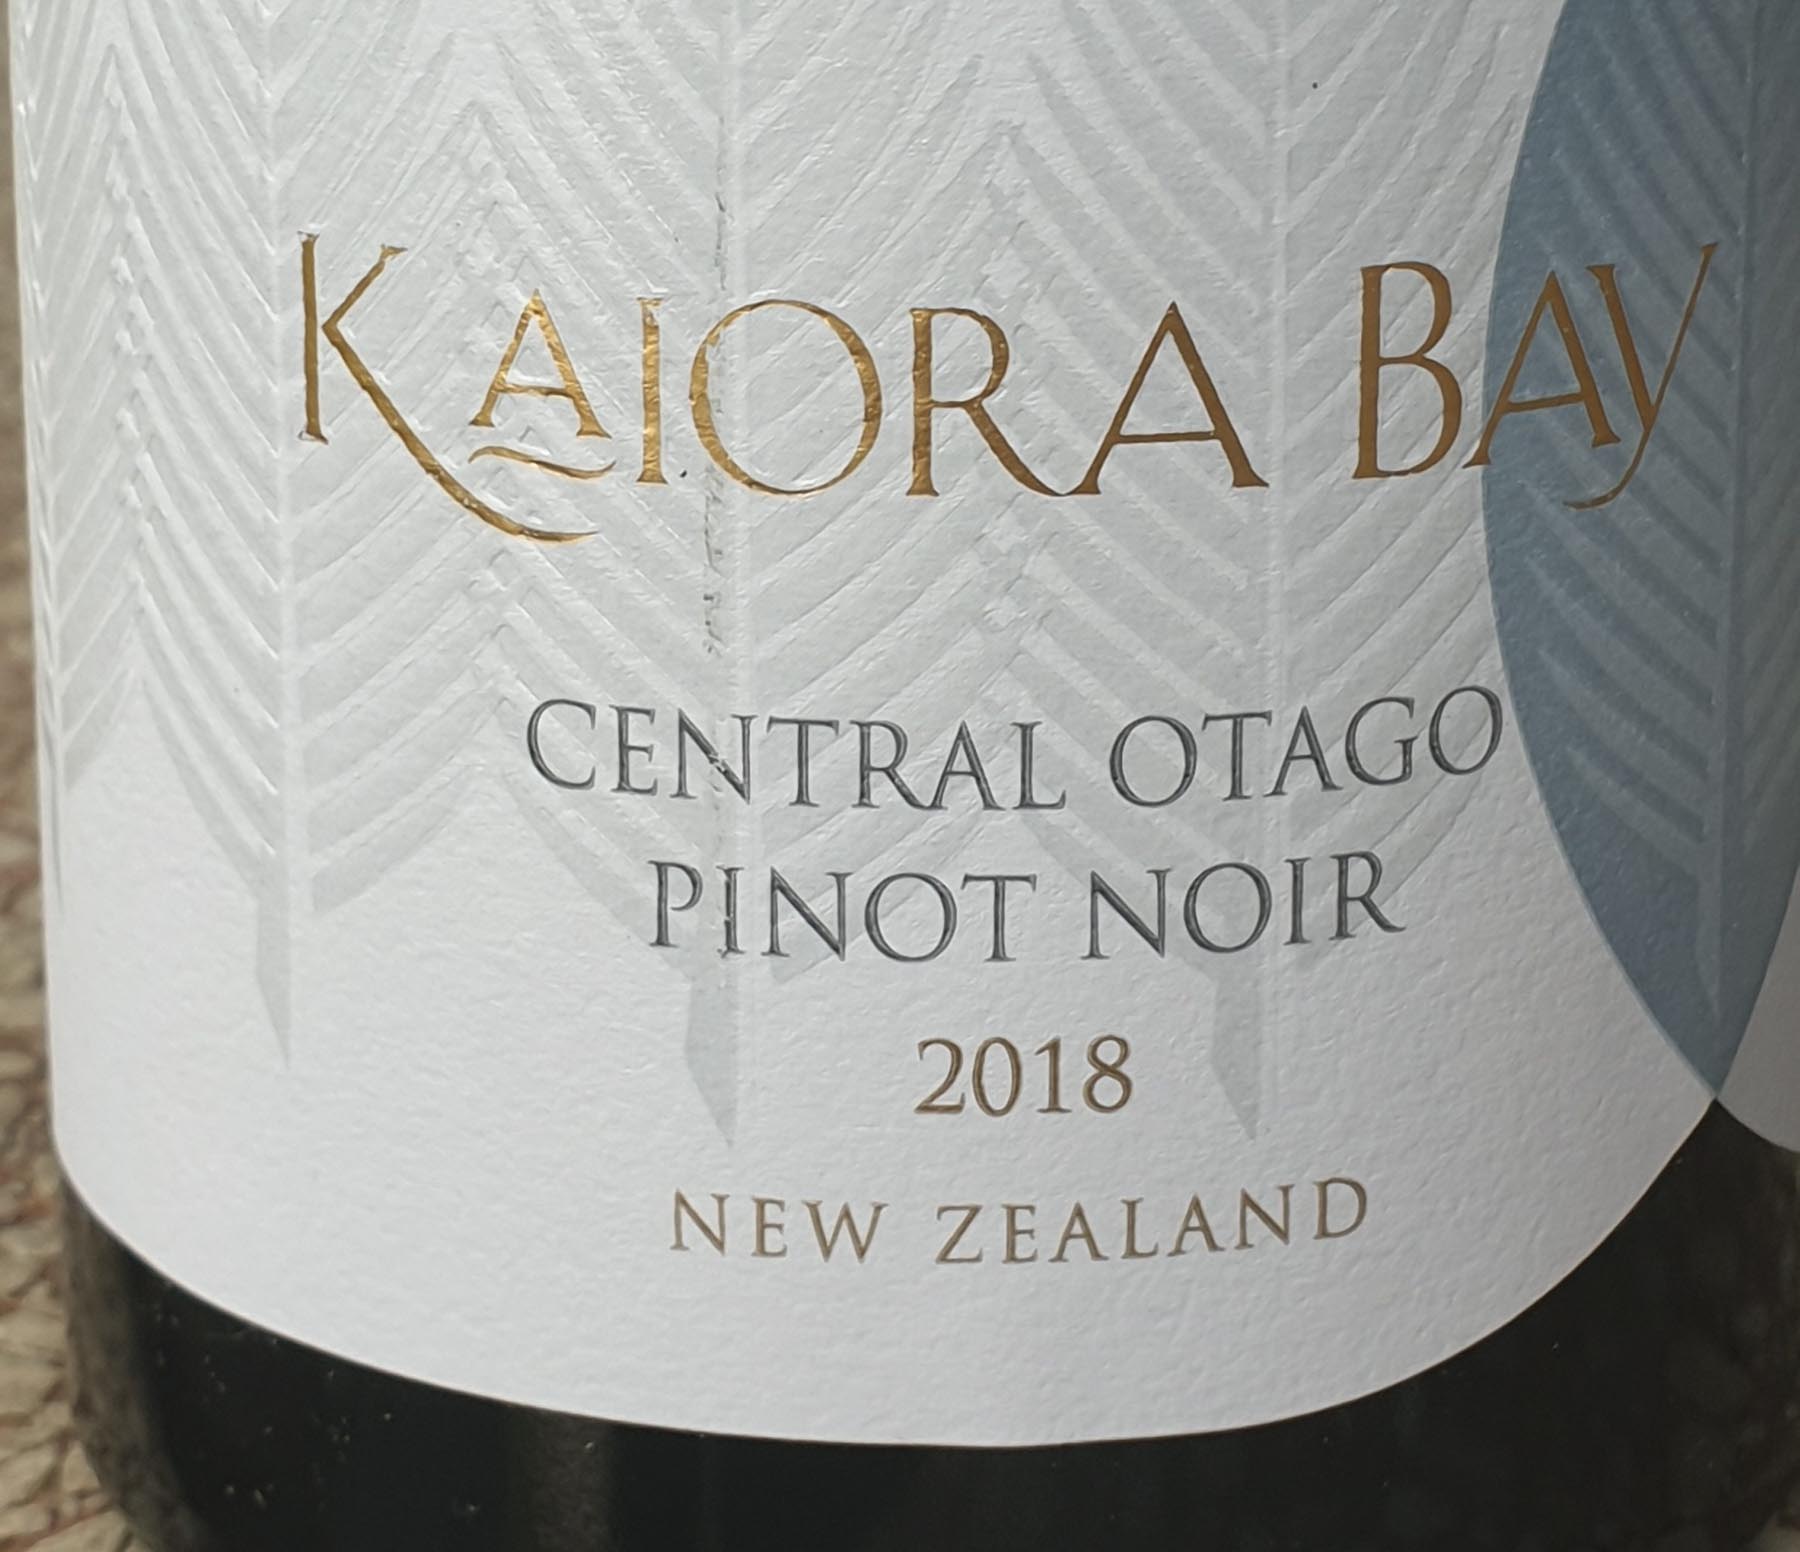 Kaiora Bay Reserve – Noir Otago 2018 Pinot Central